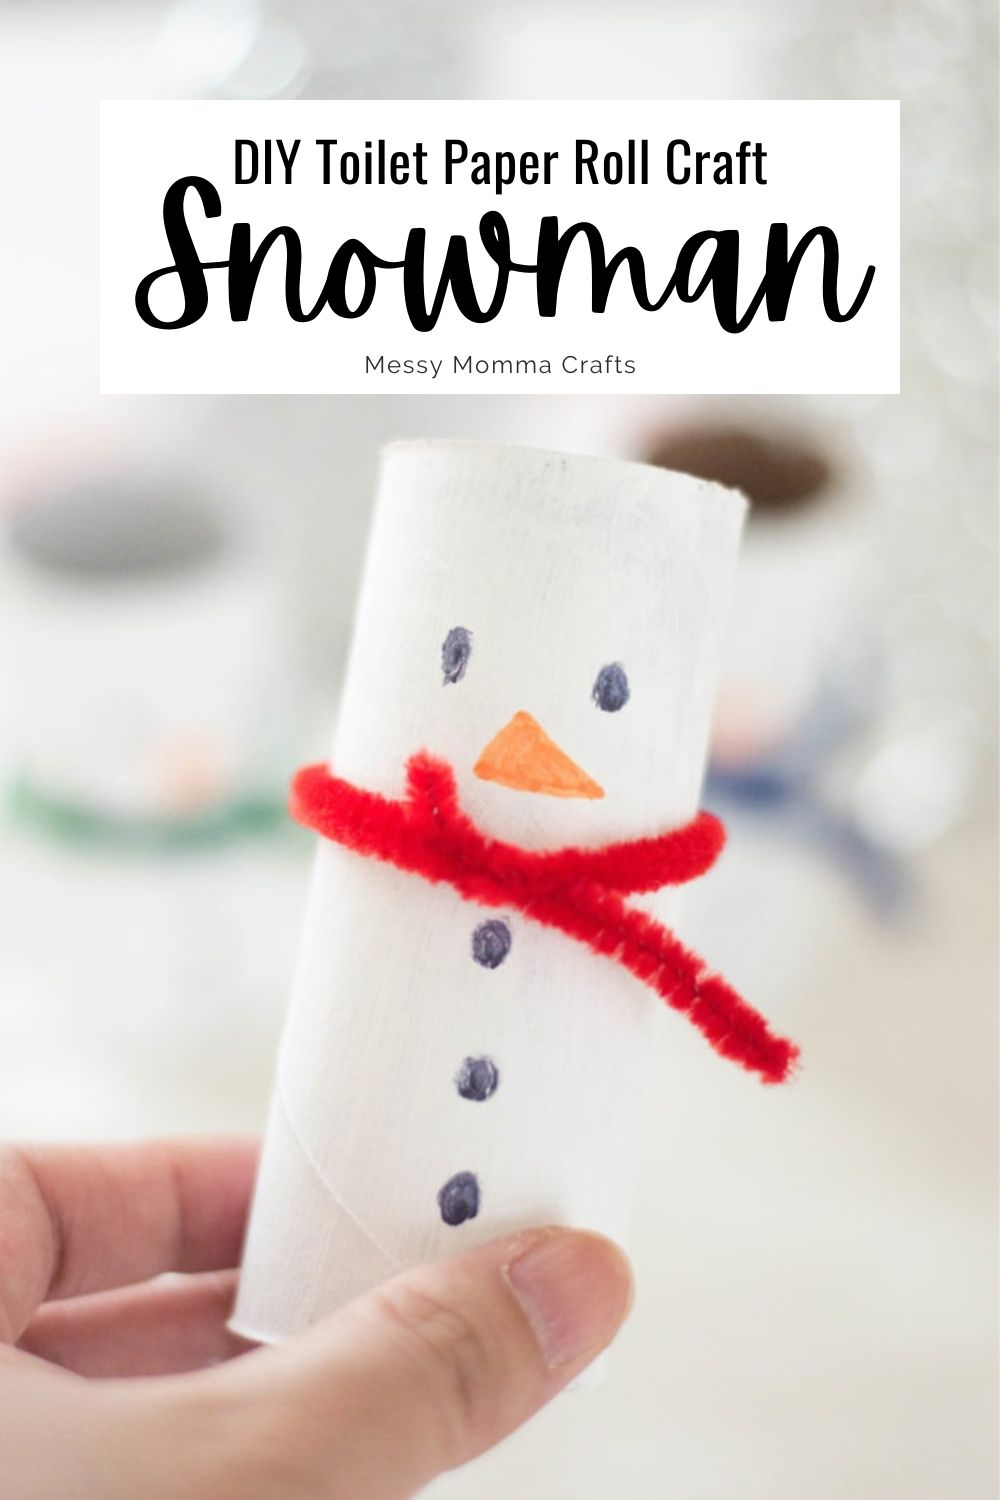 DIY toilet paper roll craft snowman.